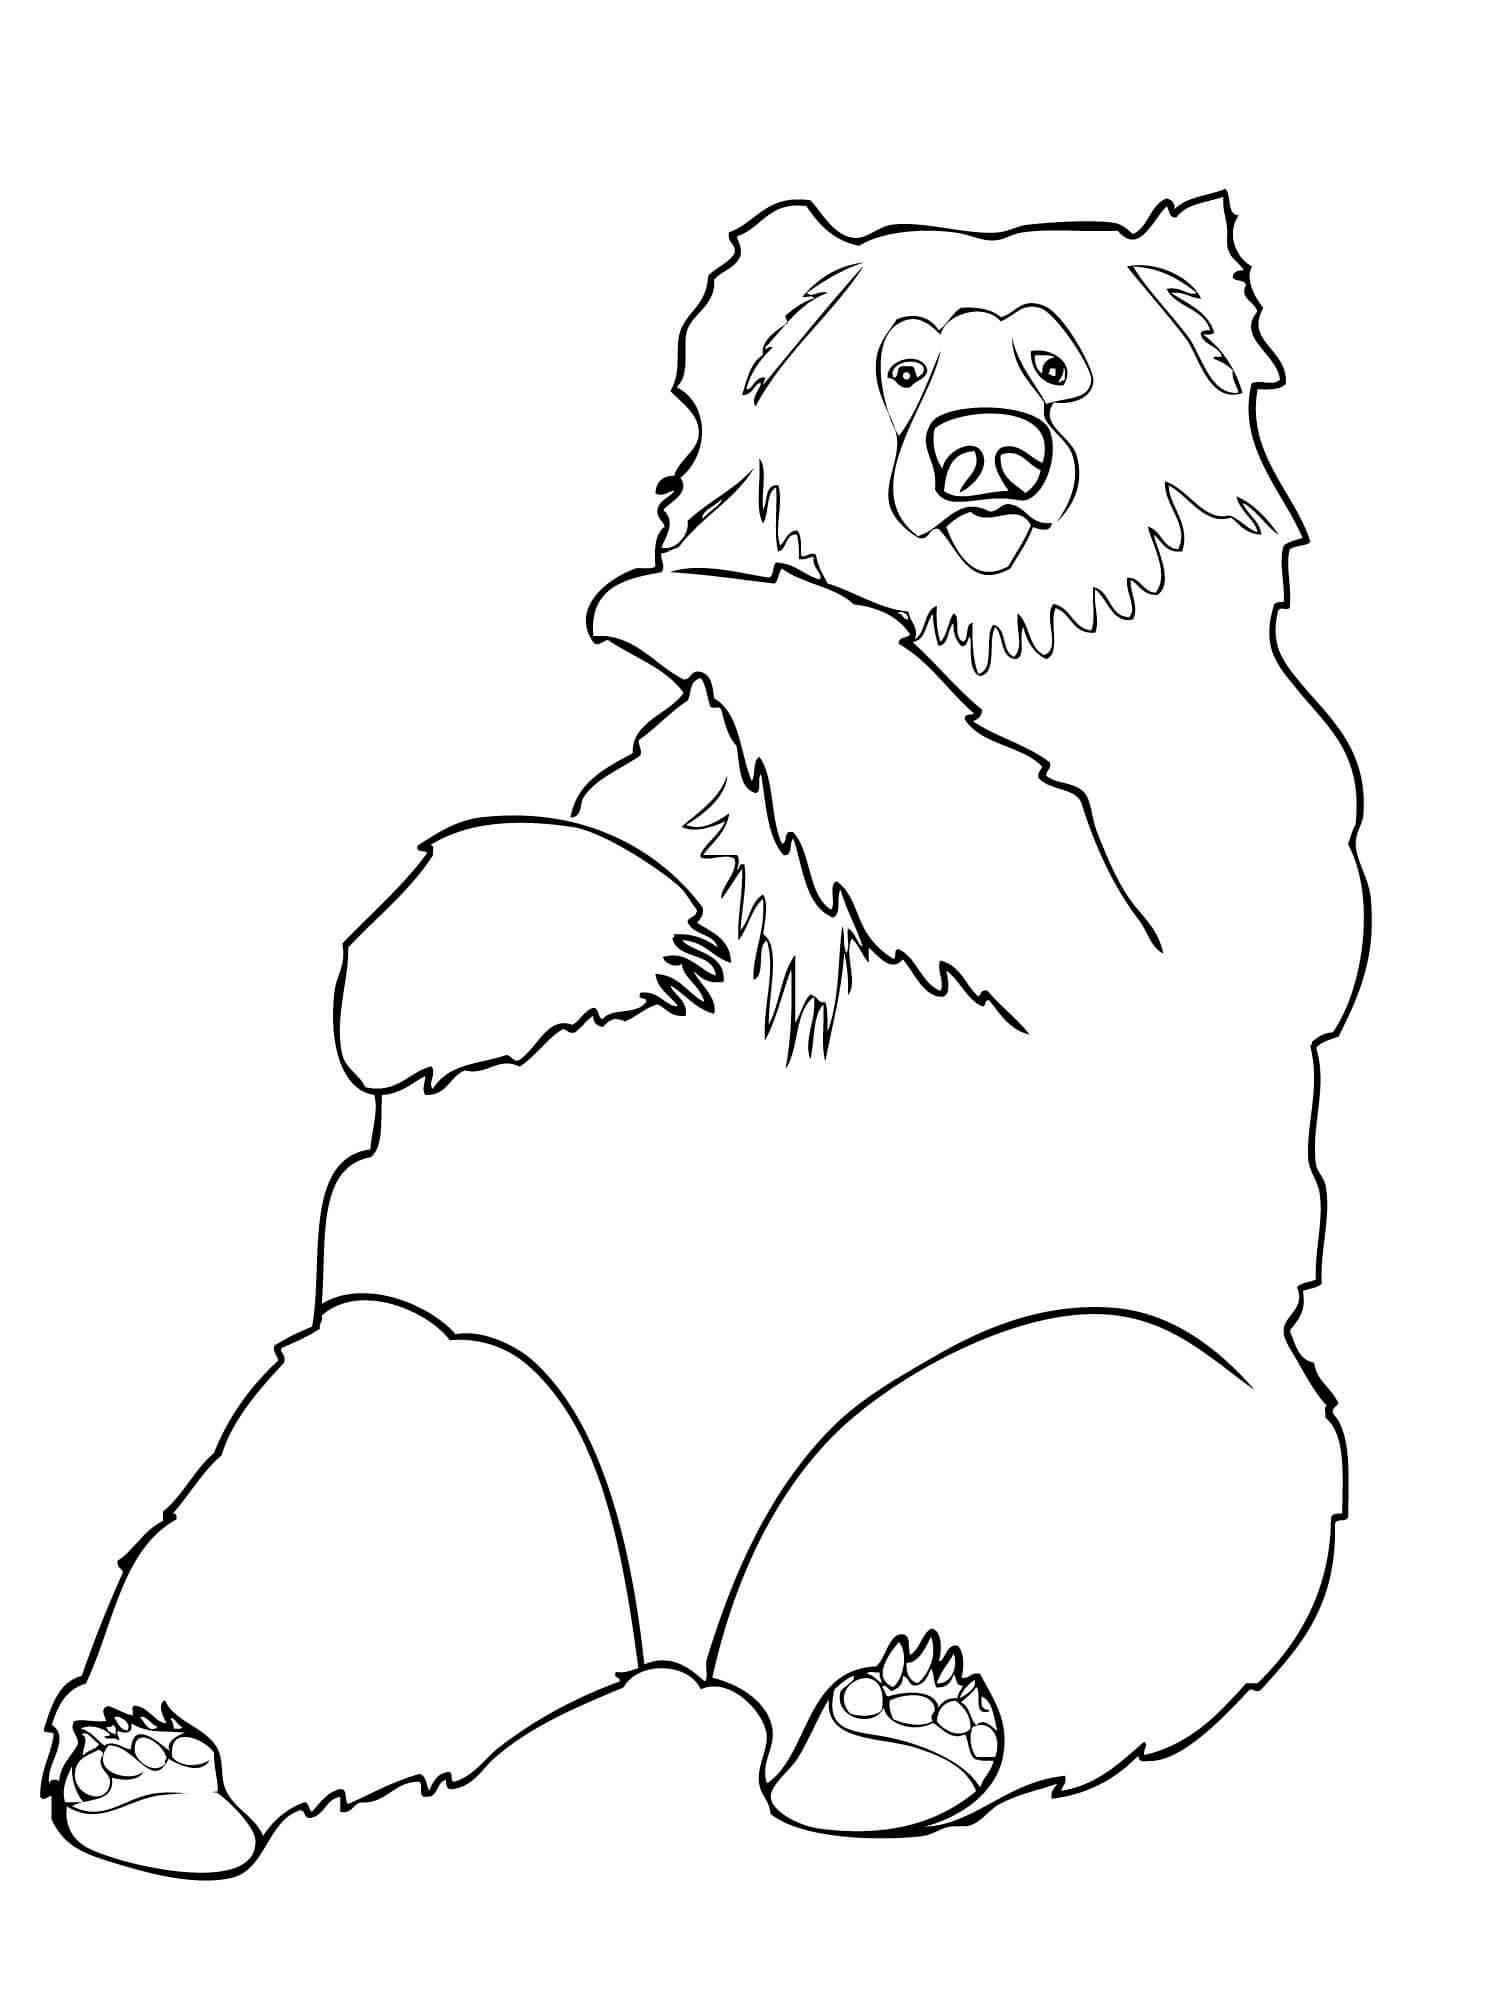 Sitting Sloth Bear coloring page